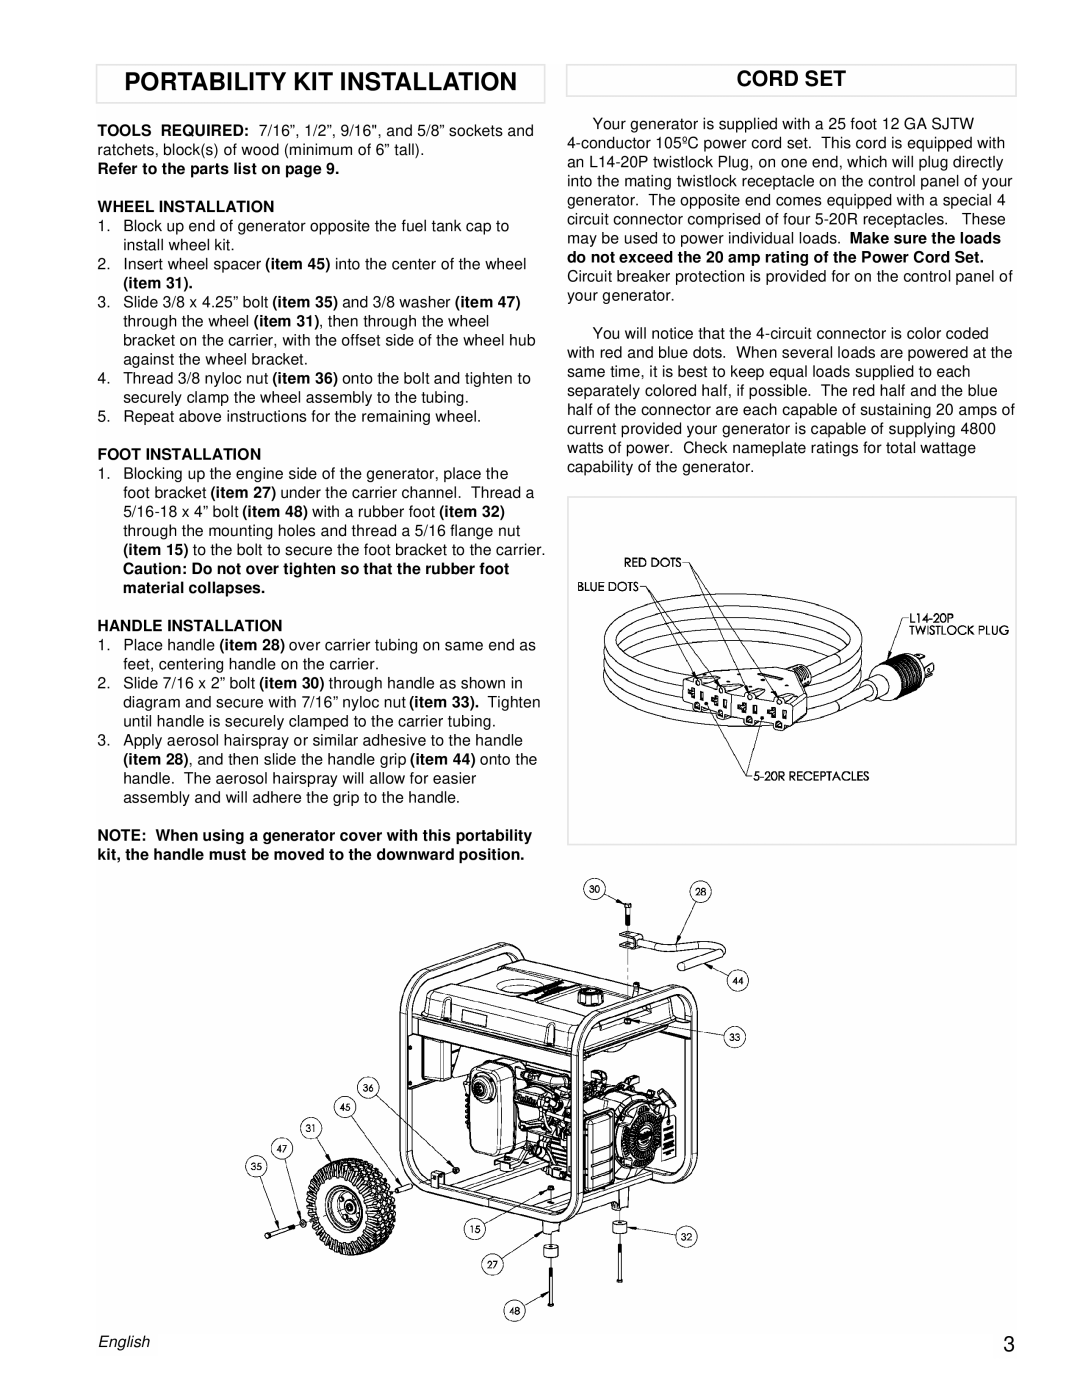 Powermate PM0435252 manual Portability Kit Installation, Cord Set, English 